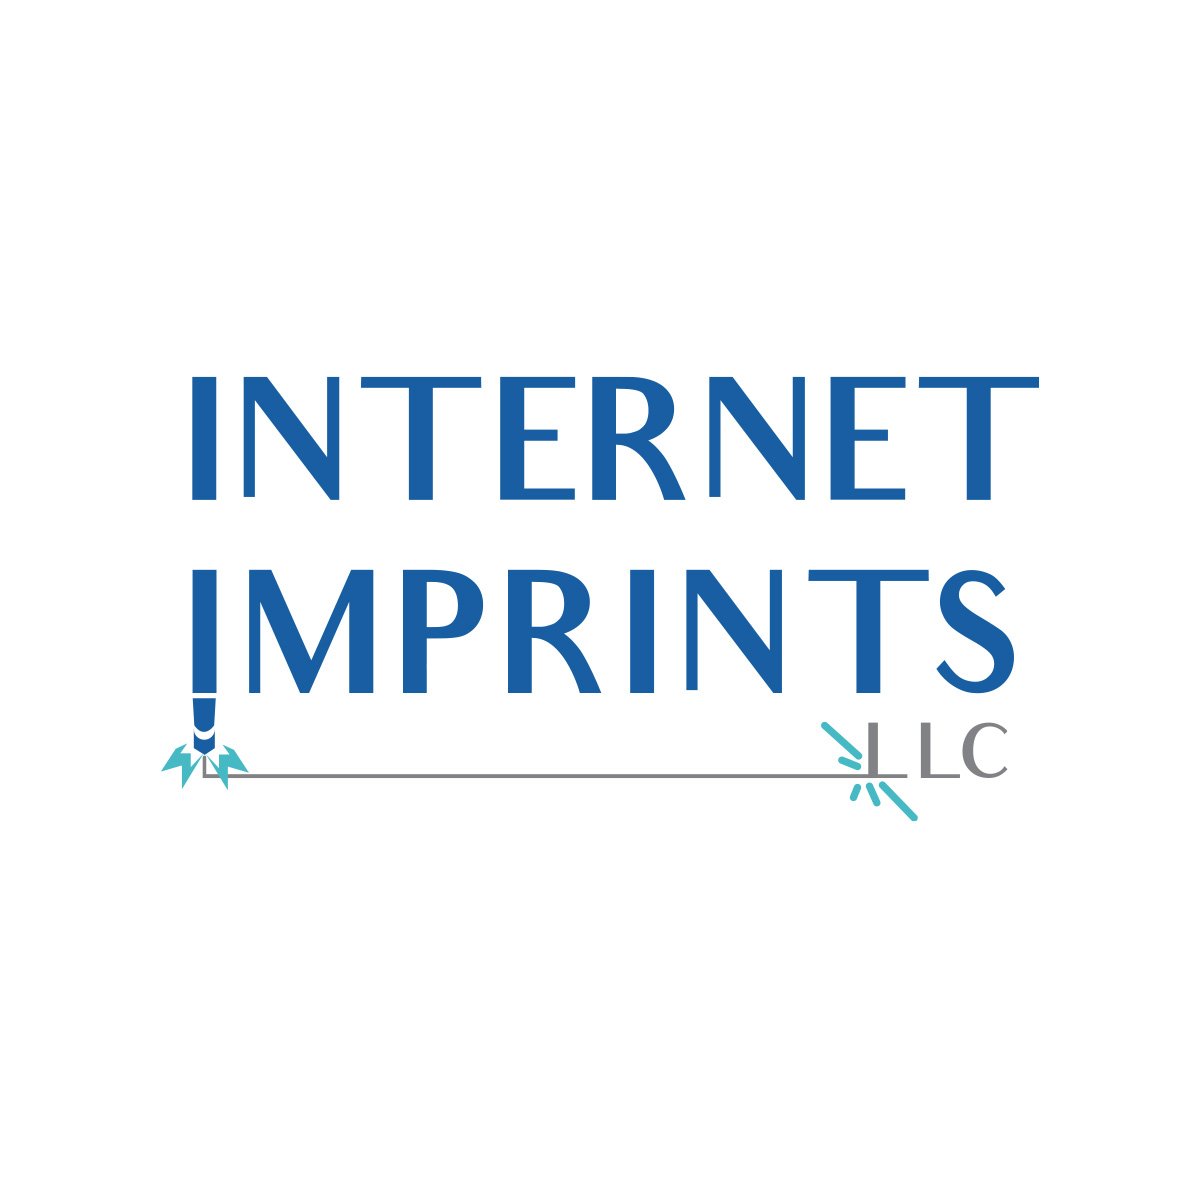 Internet Imprints